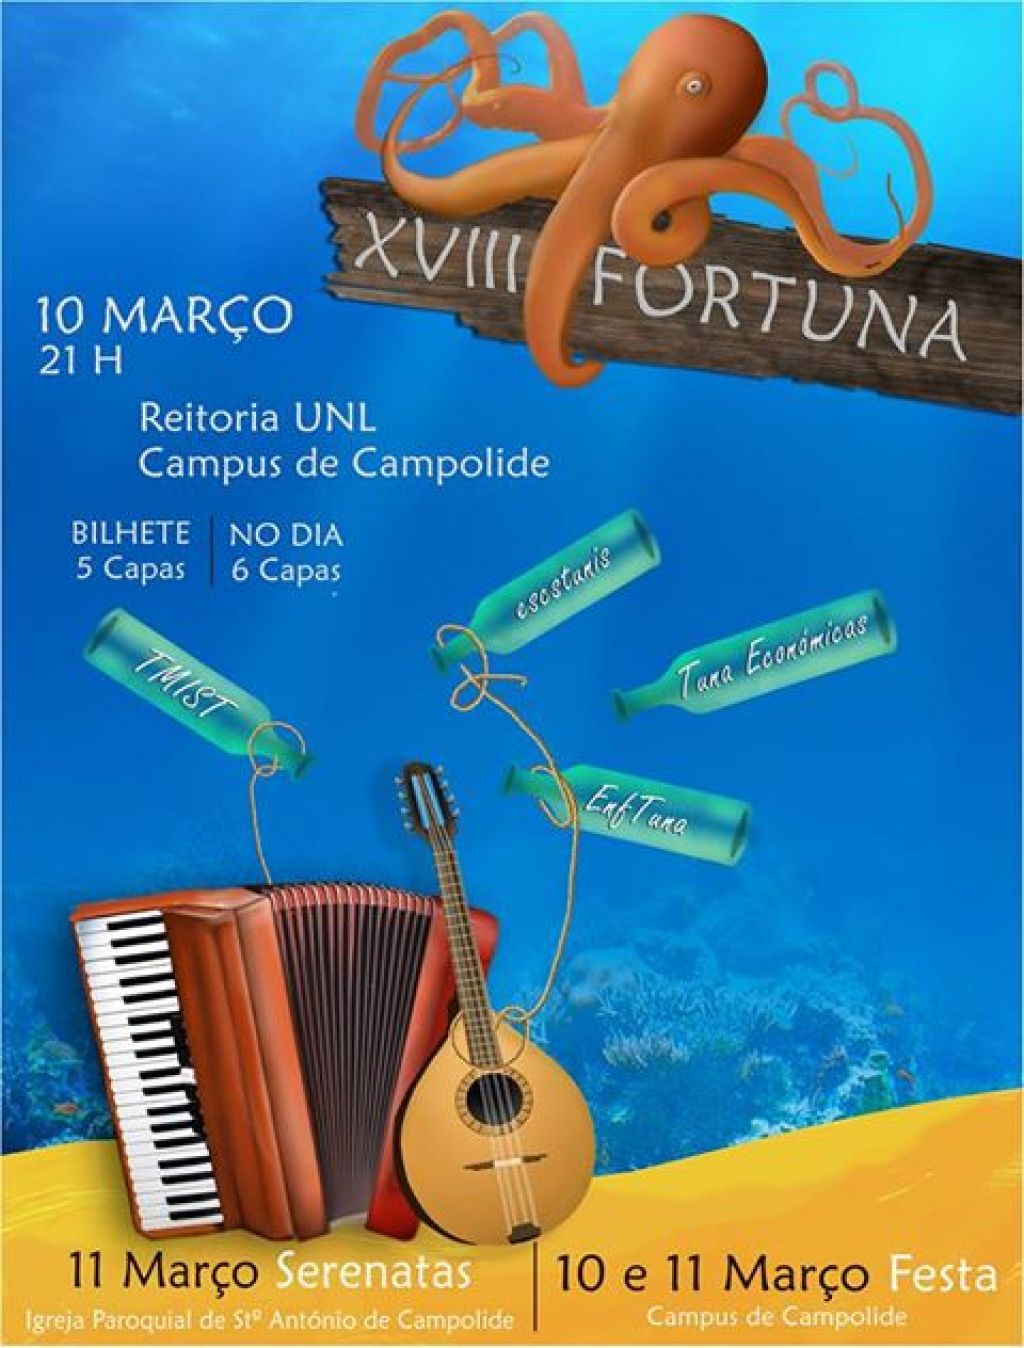 XVIII Fortuna - Festival de Tunas Mistas da Nova SBE